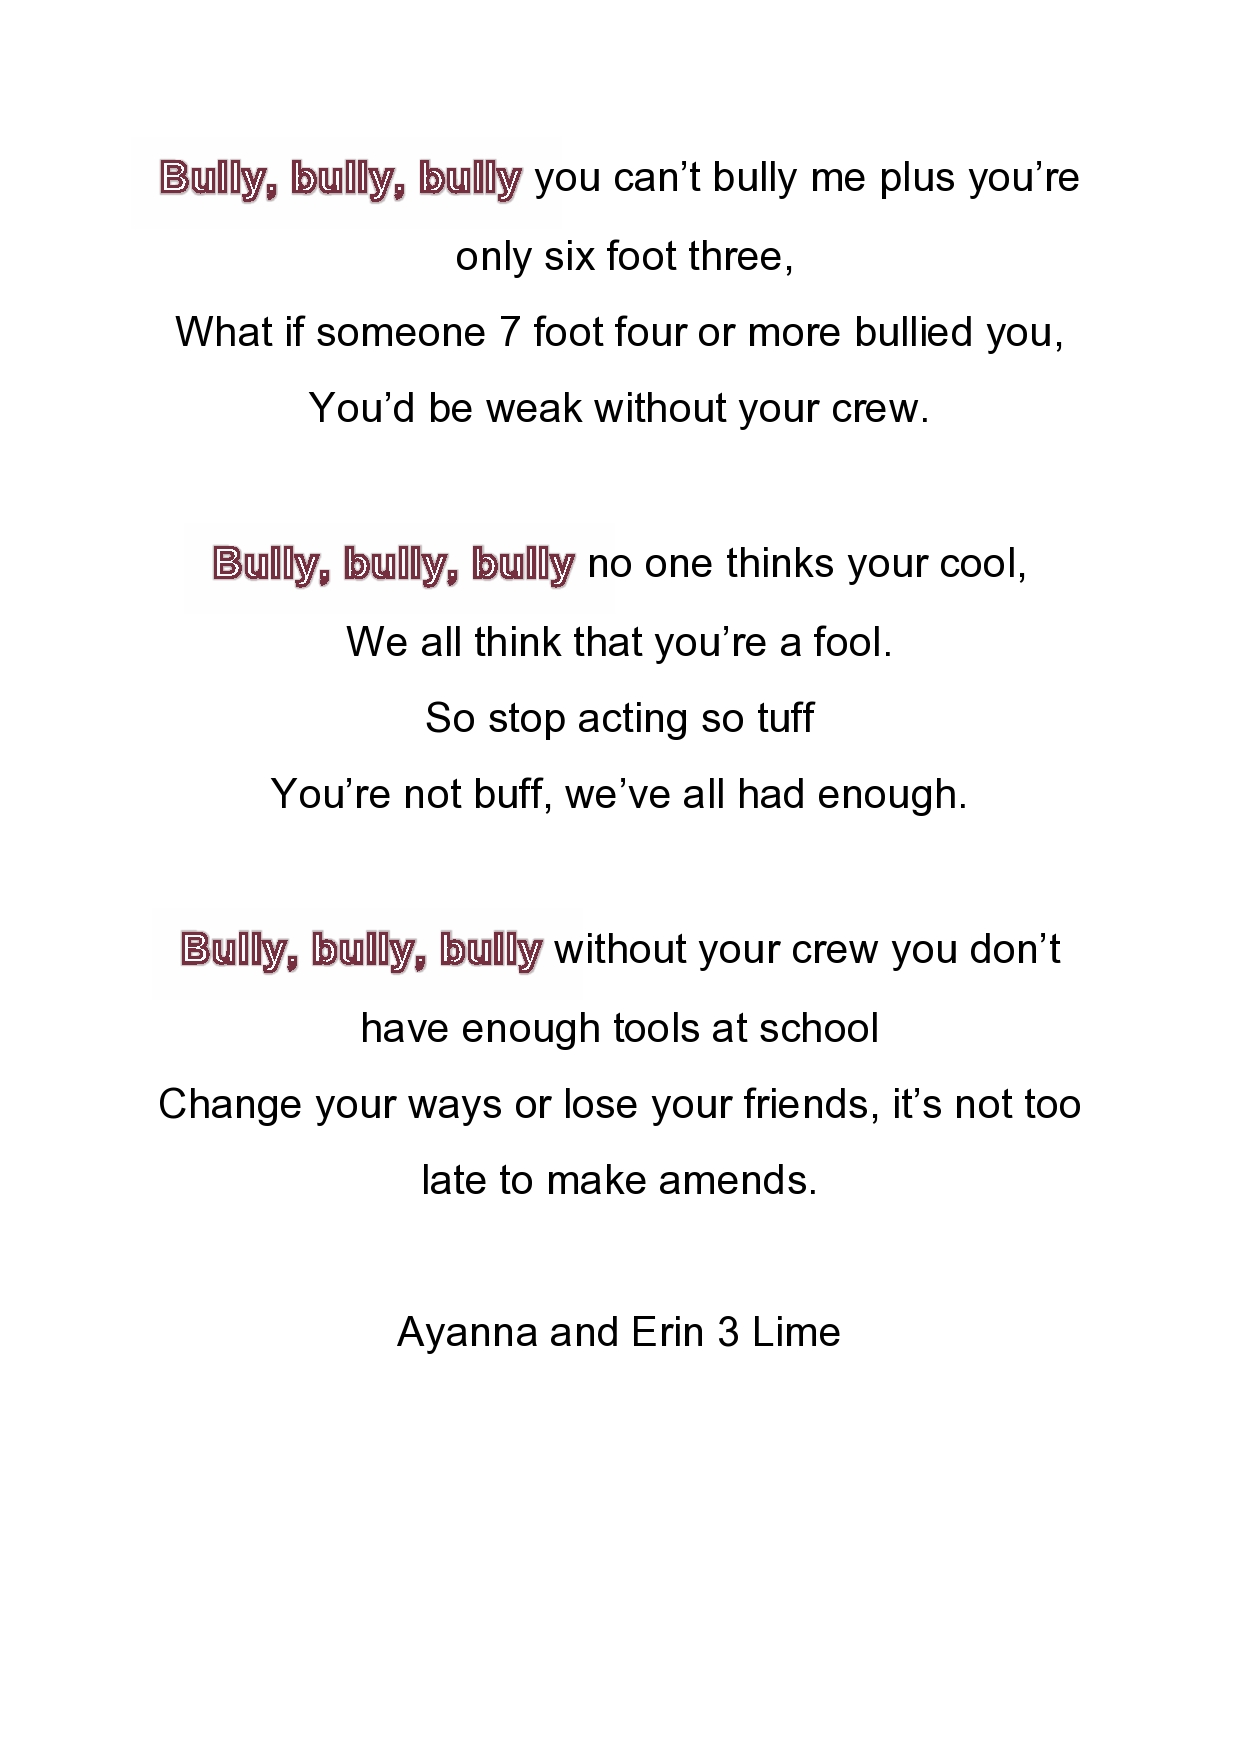 bully bully bully Ayanna and Erin-page0001.jpg